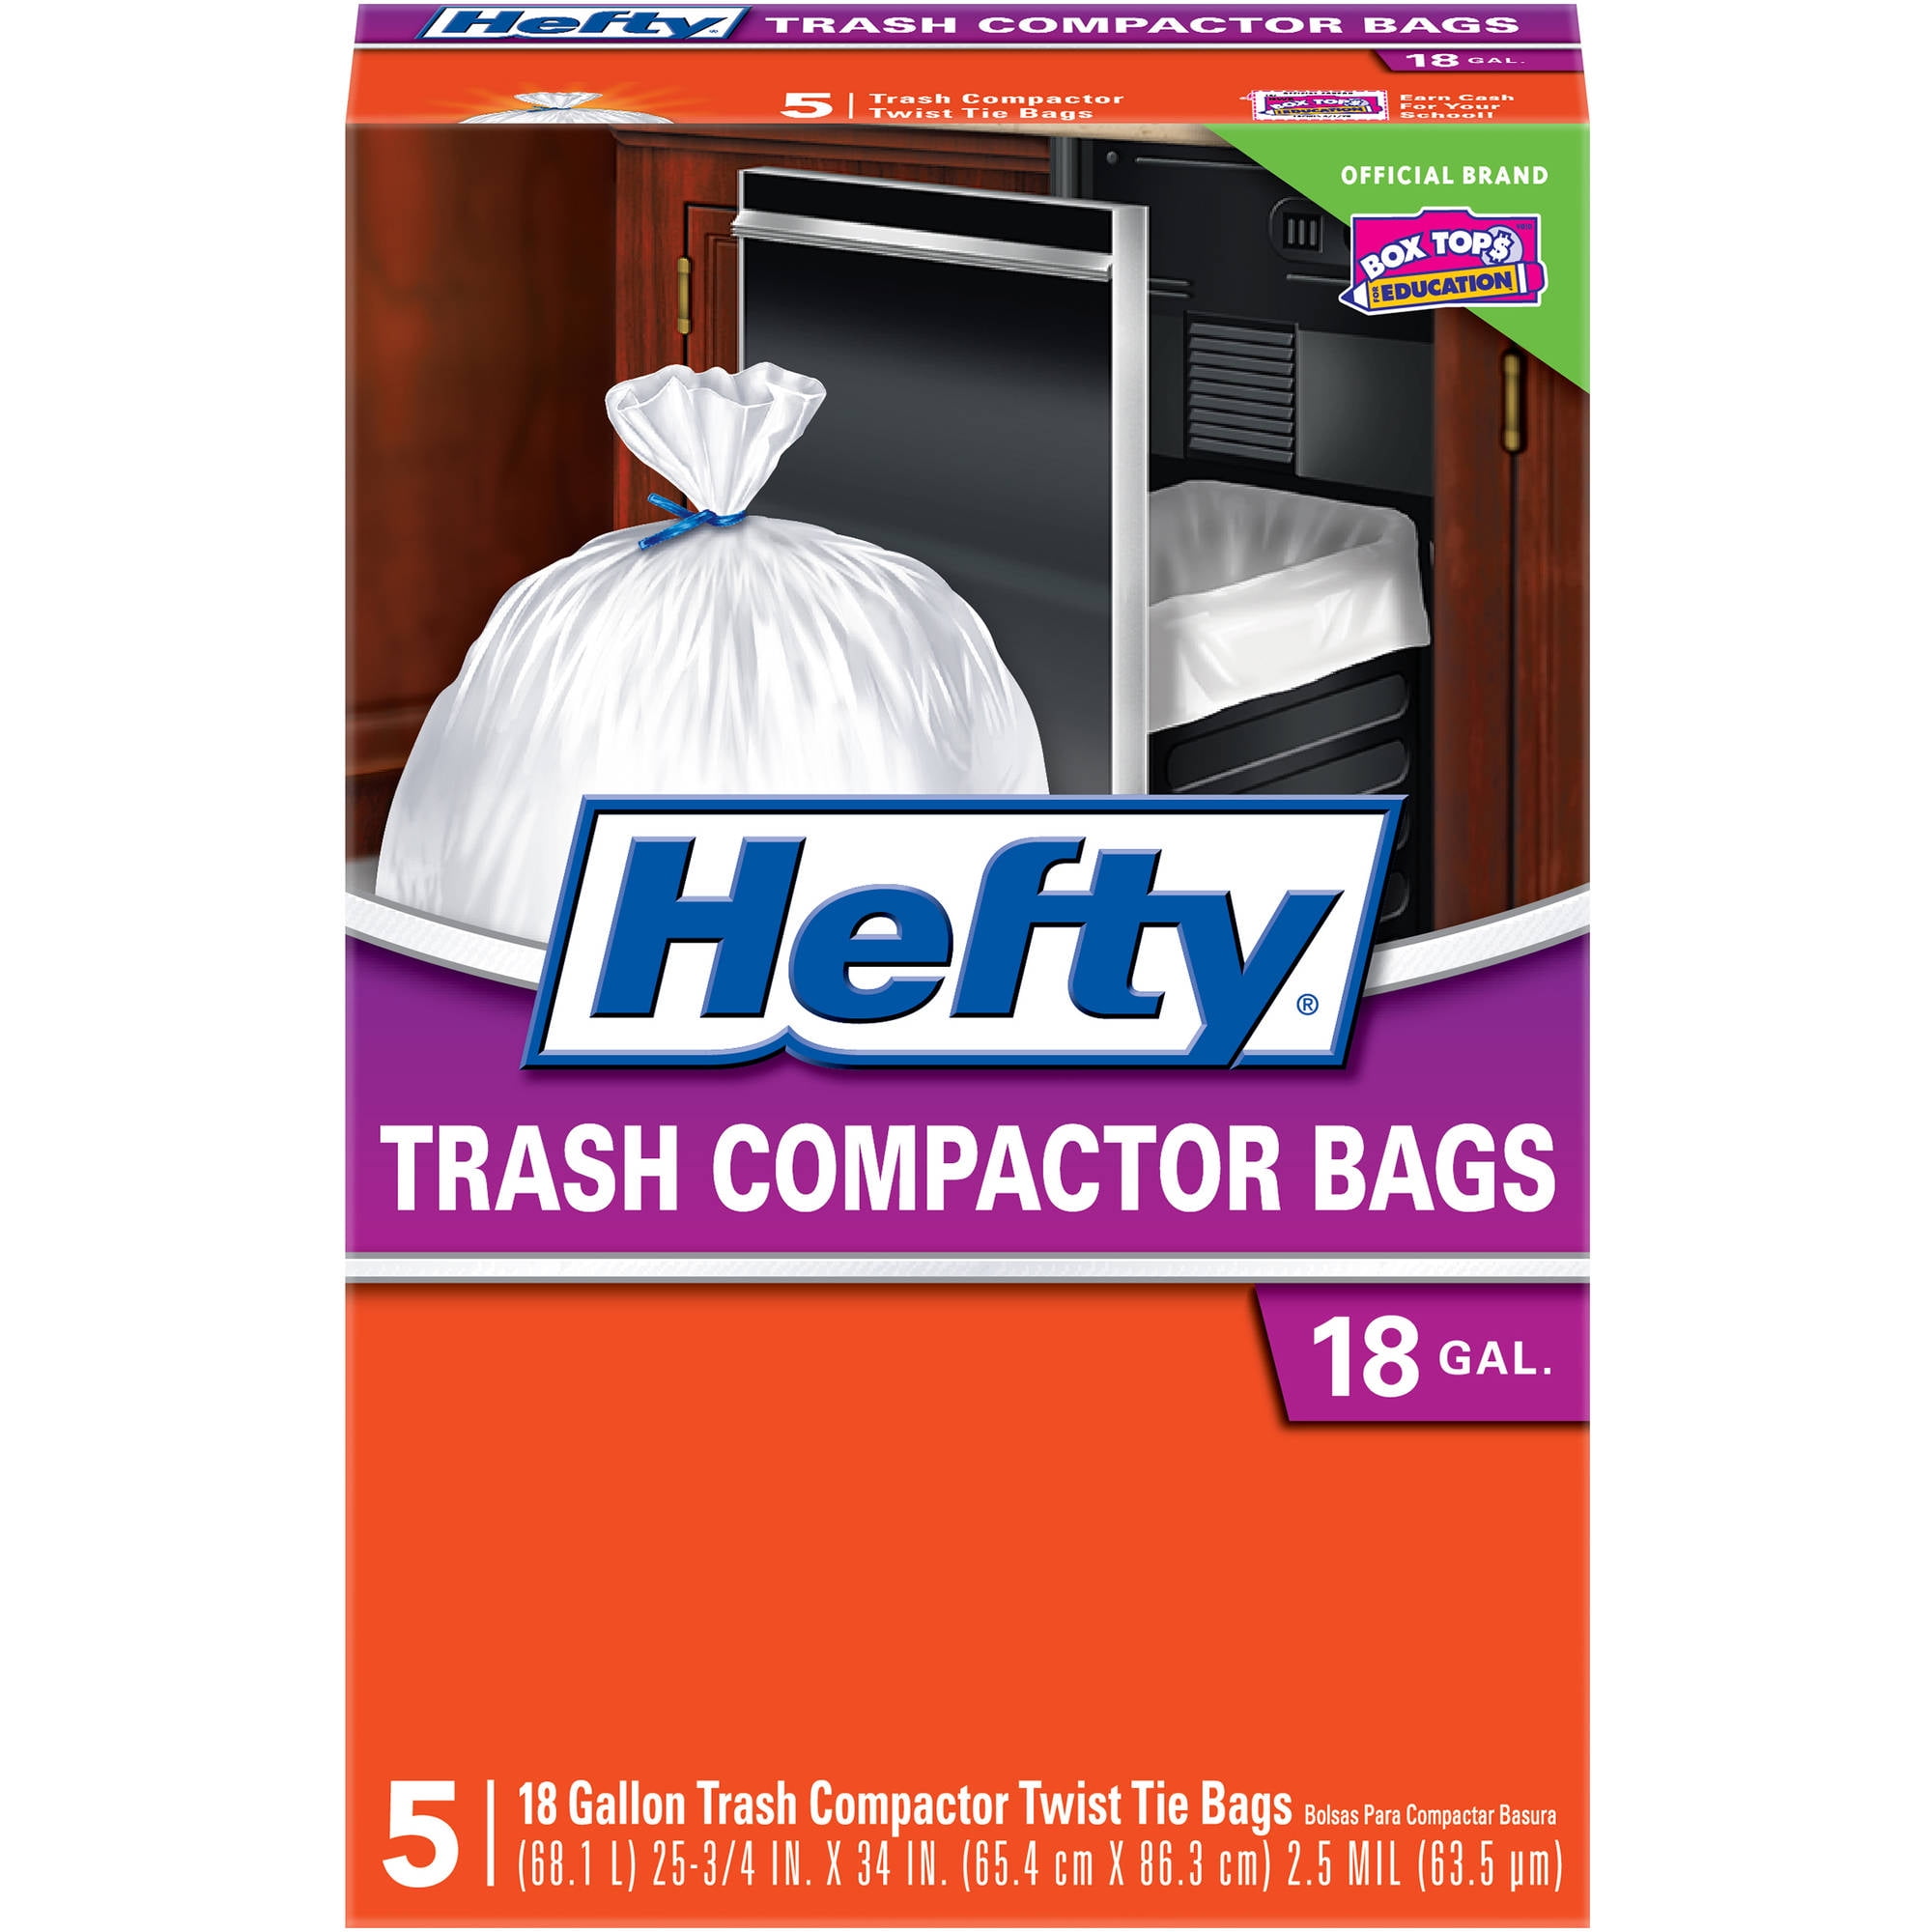 BestAir WMCK1335012-2 Trash Compactor Bag, Paper/Plastic